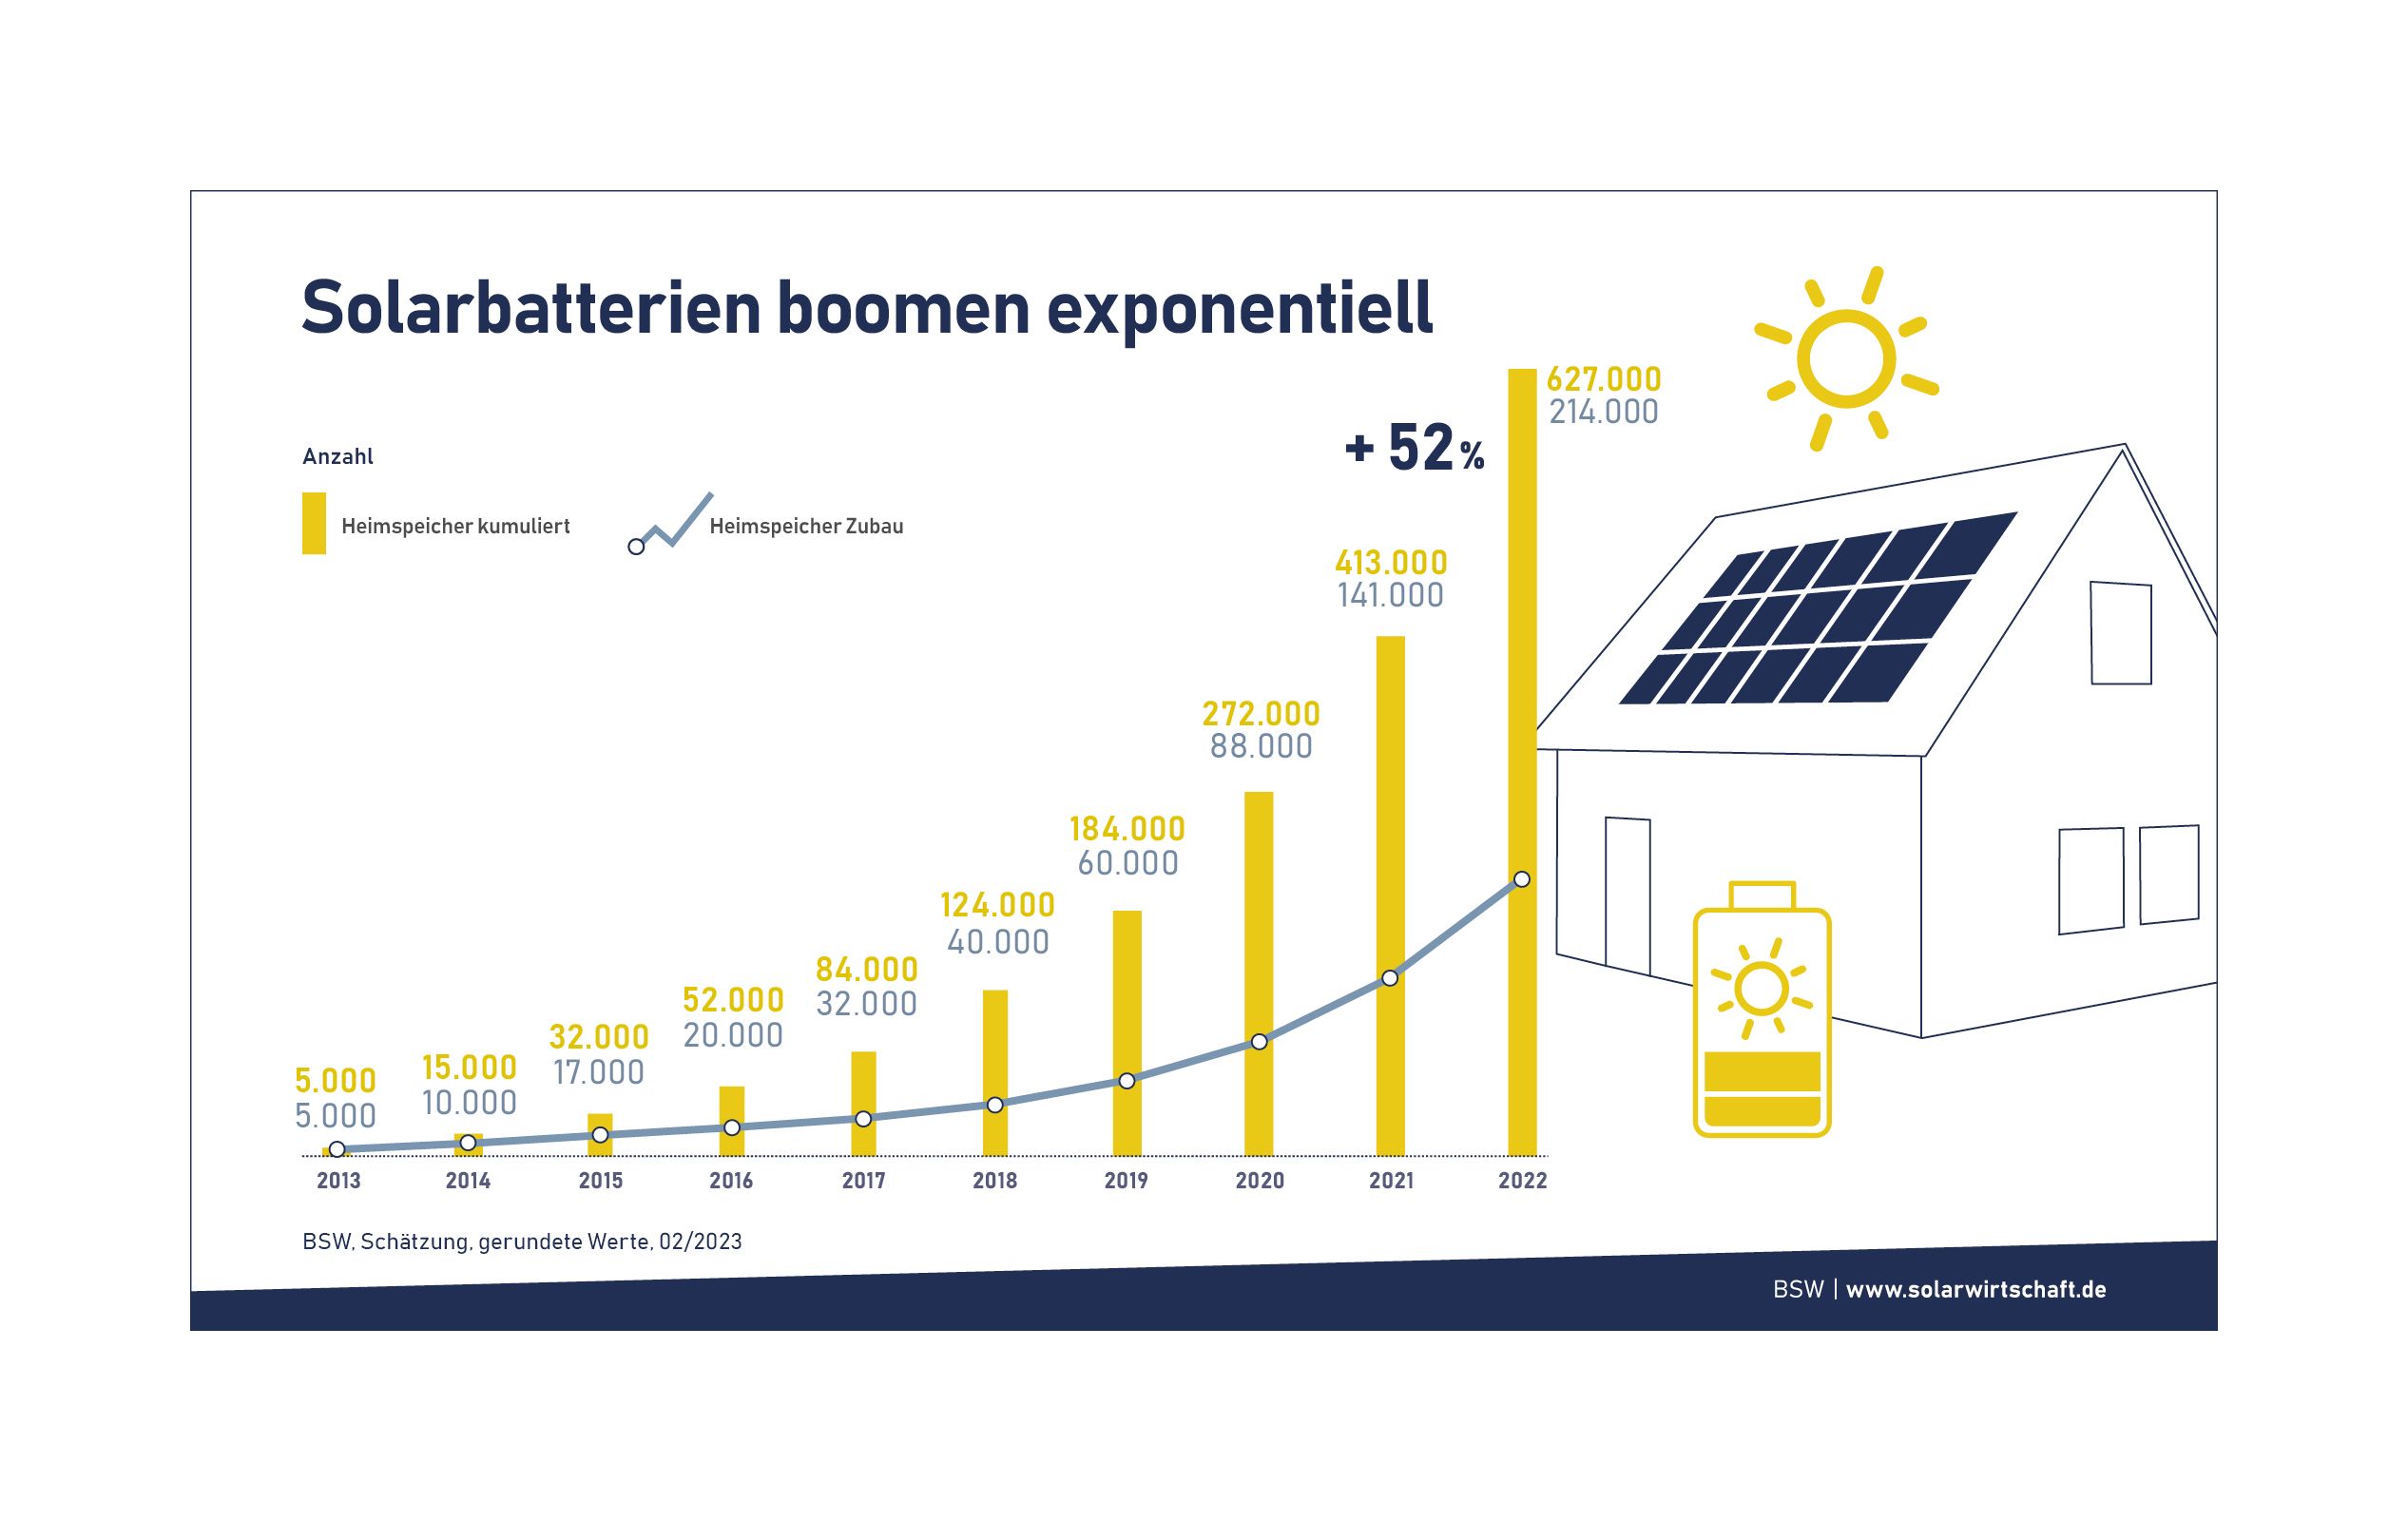 https://www.solarwirtschaft.de/wp-content/uploads/2021/08/bsw_infogr_solarbatterie_th.jpg